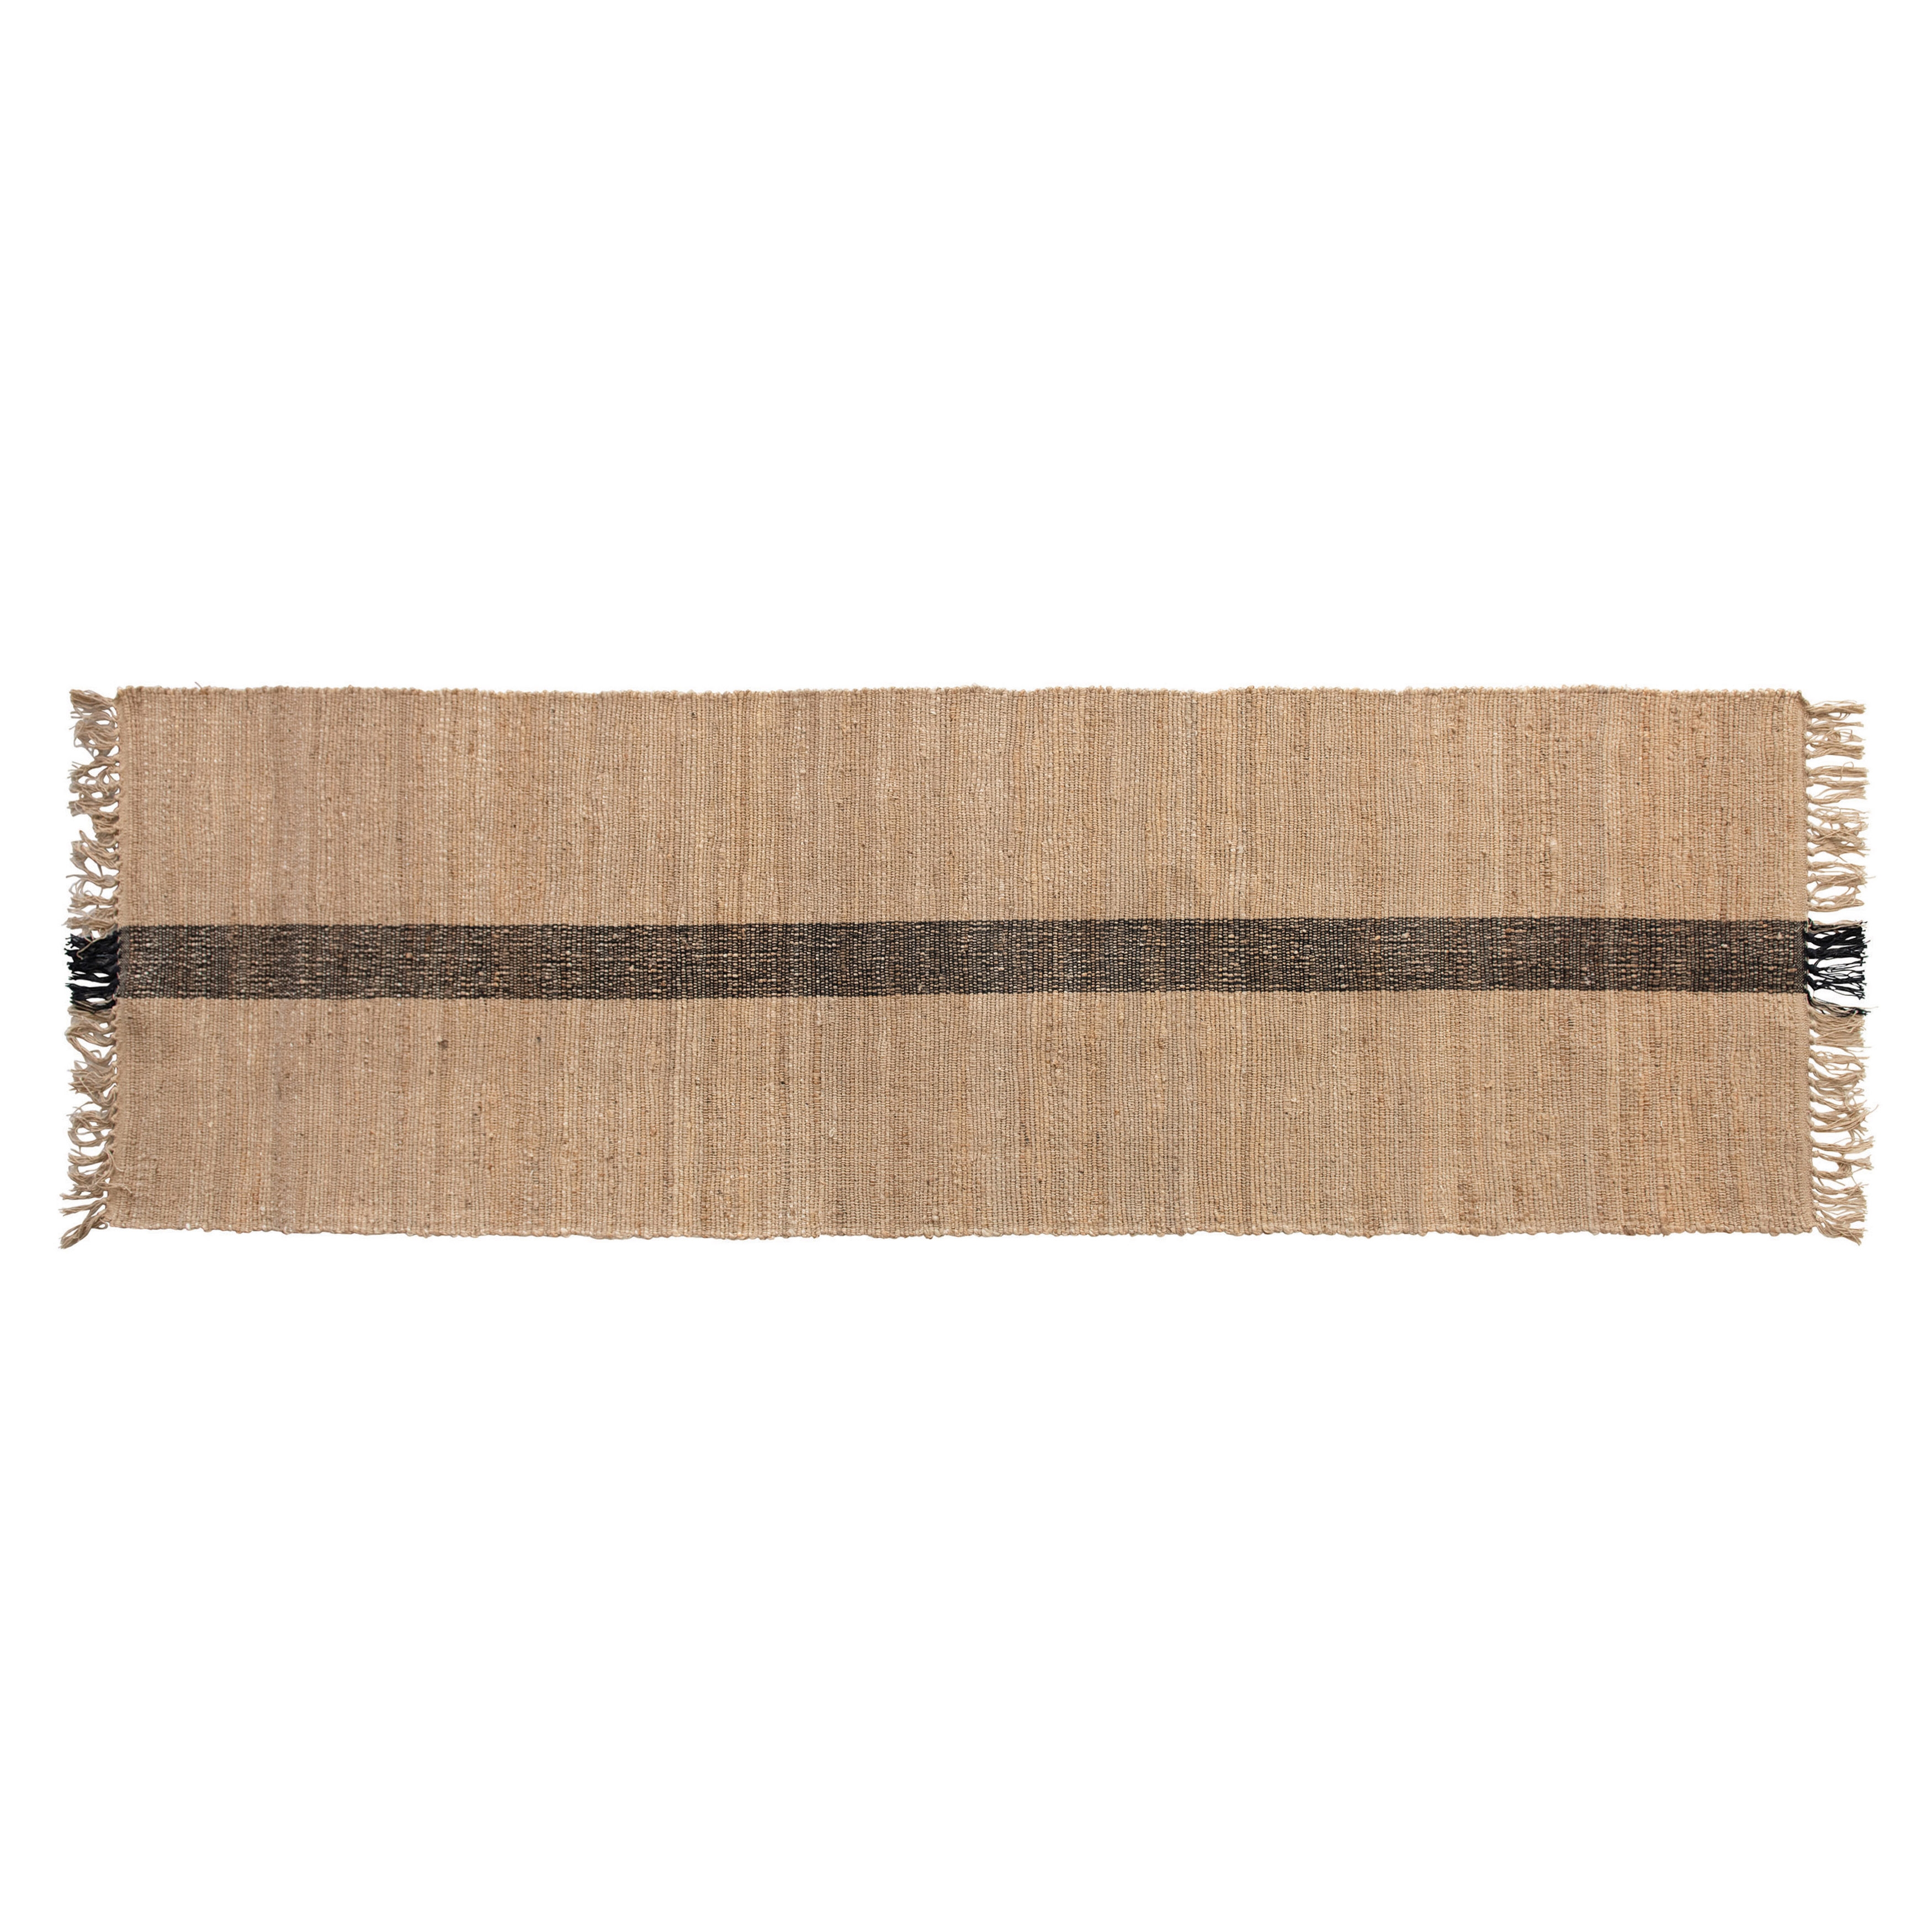 Jute & Cotton Floor Runner with Black Woven Stripe, Natural - Image 0